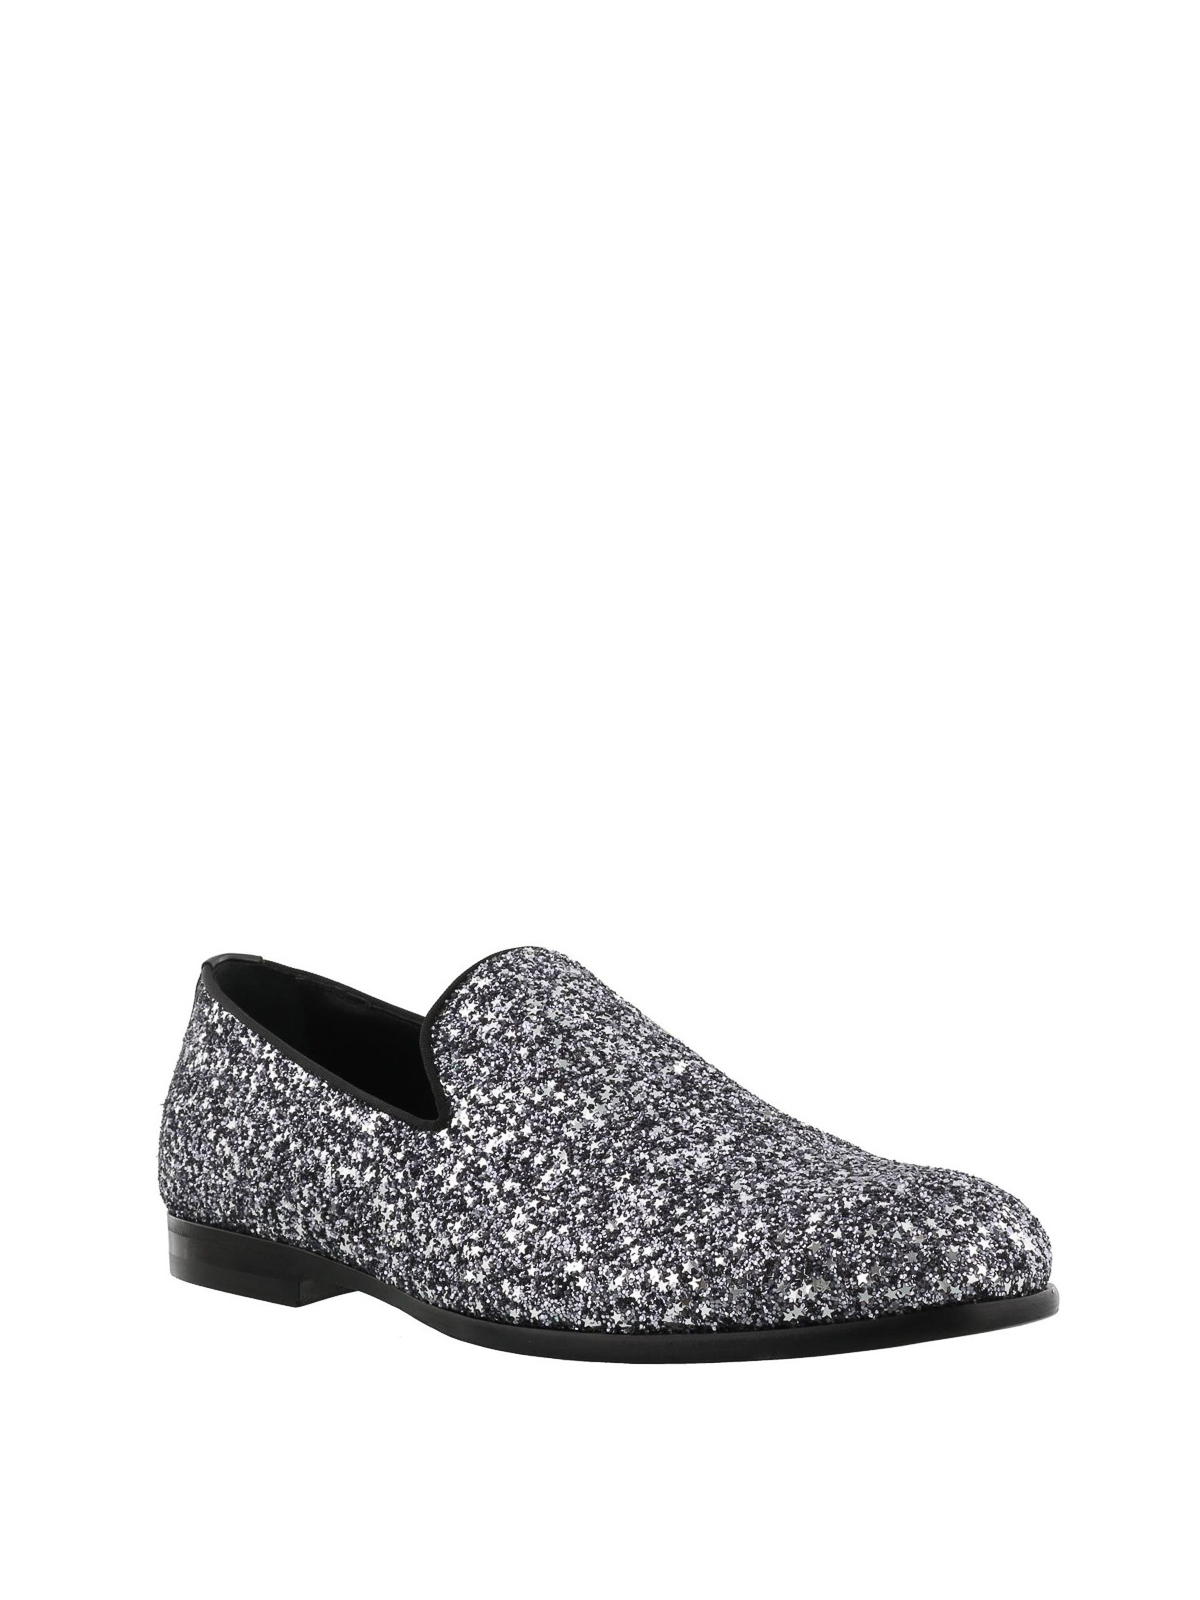 Loafers & Slippers Jimmy - Marlo gunmetal coarse glitter shoes - MARLOARGGUNMETALMIX